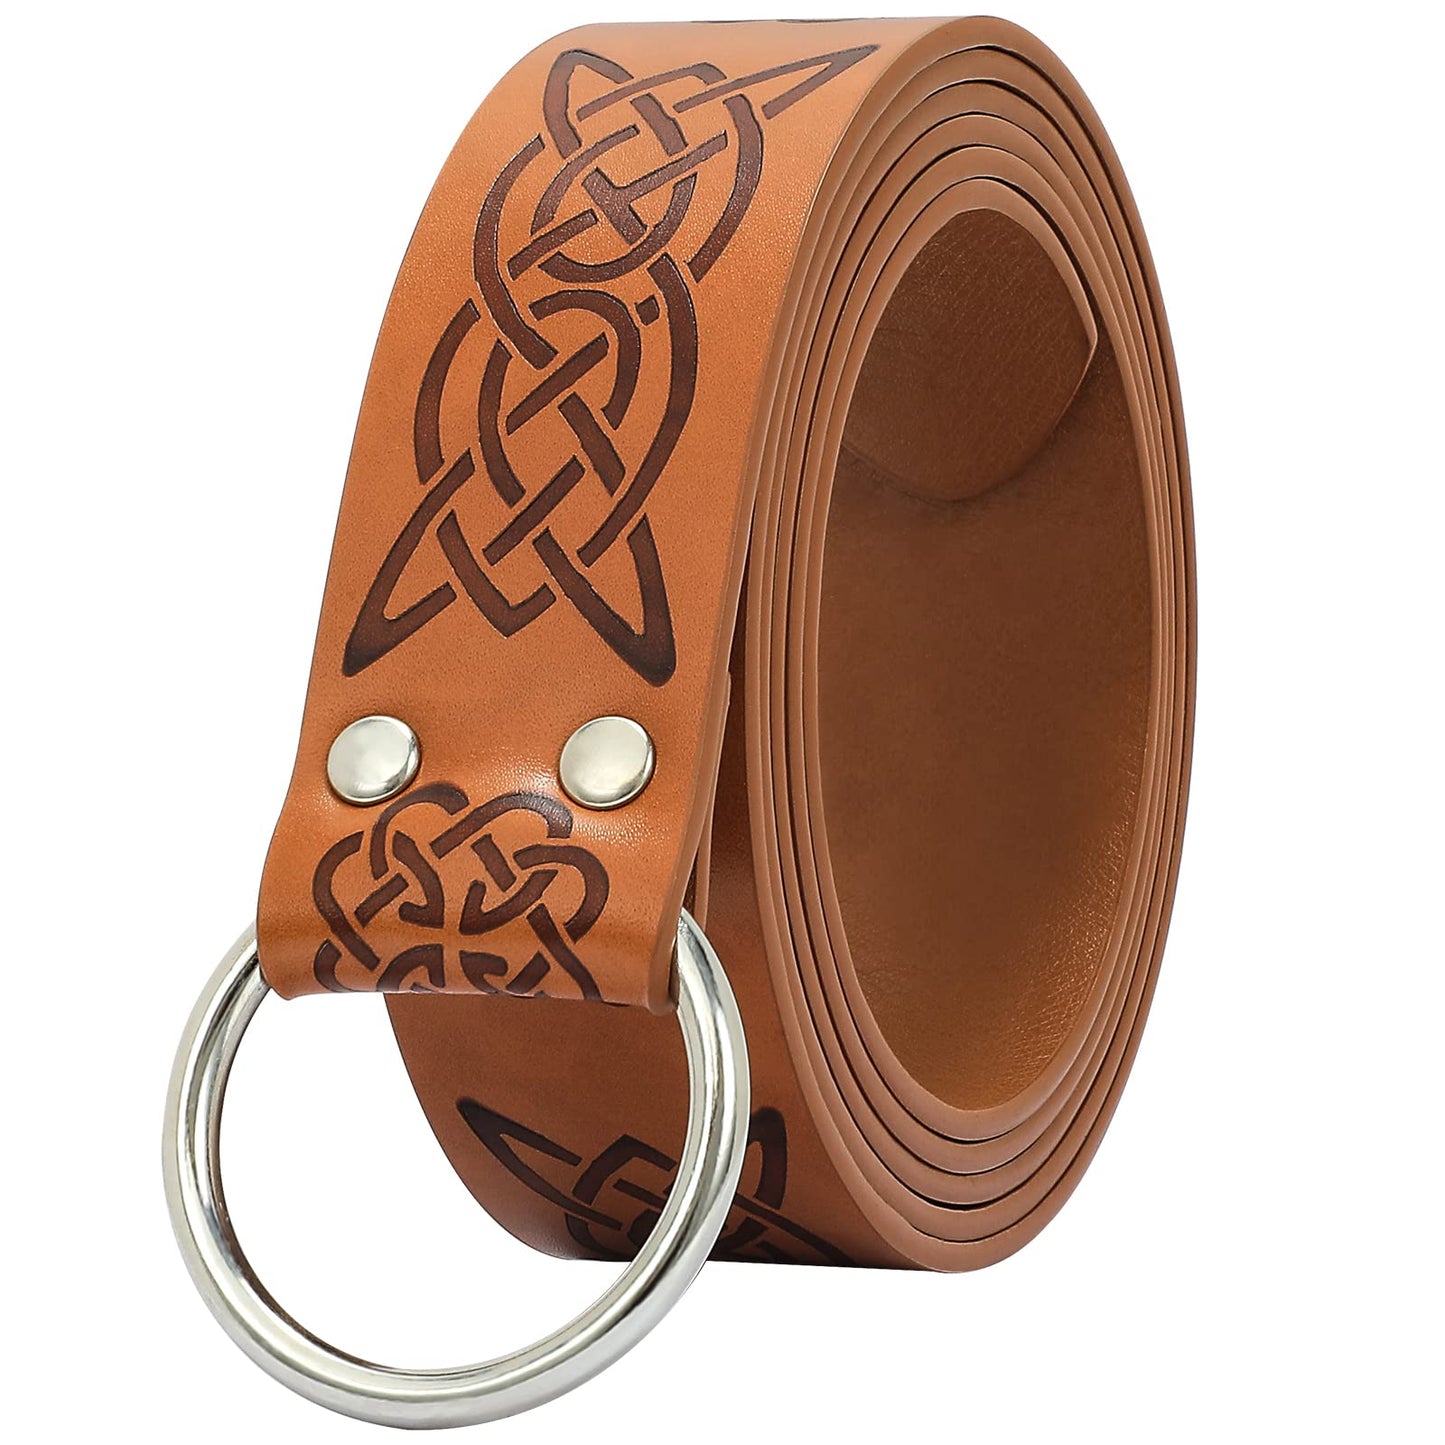 XZQTIVE Medieval Viking Belt for Men Embossed Leather Renaissance Knight Belt O Ring Costume Belts 0 Black Fit waist upto 56in